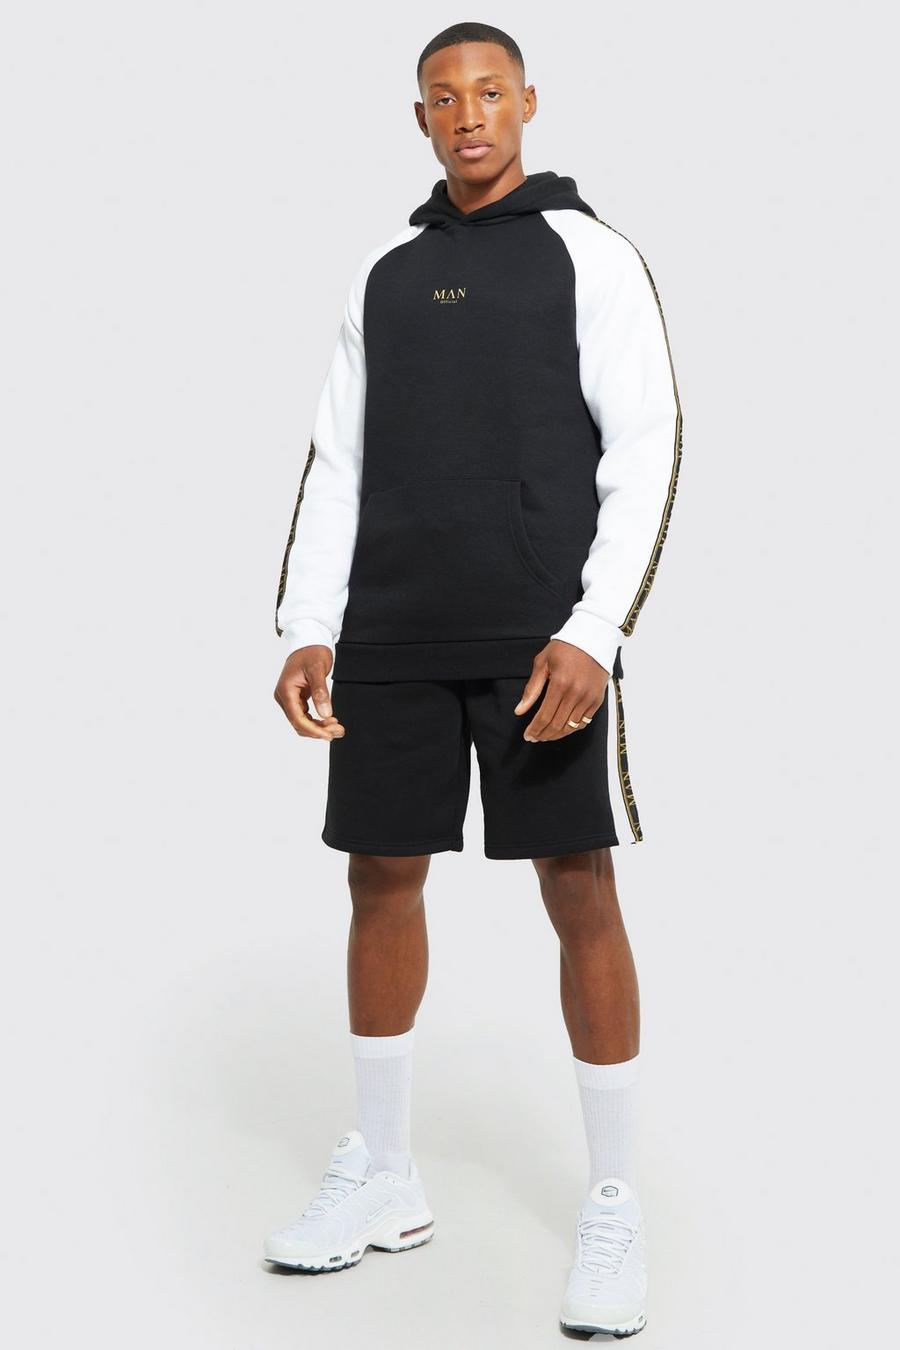 Kurzer Colorblock Trainingsanzug mit Man-Streifen, Black